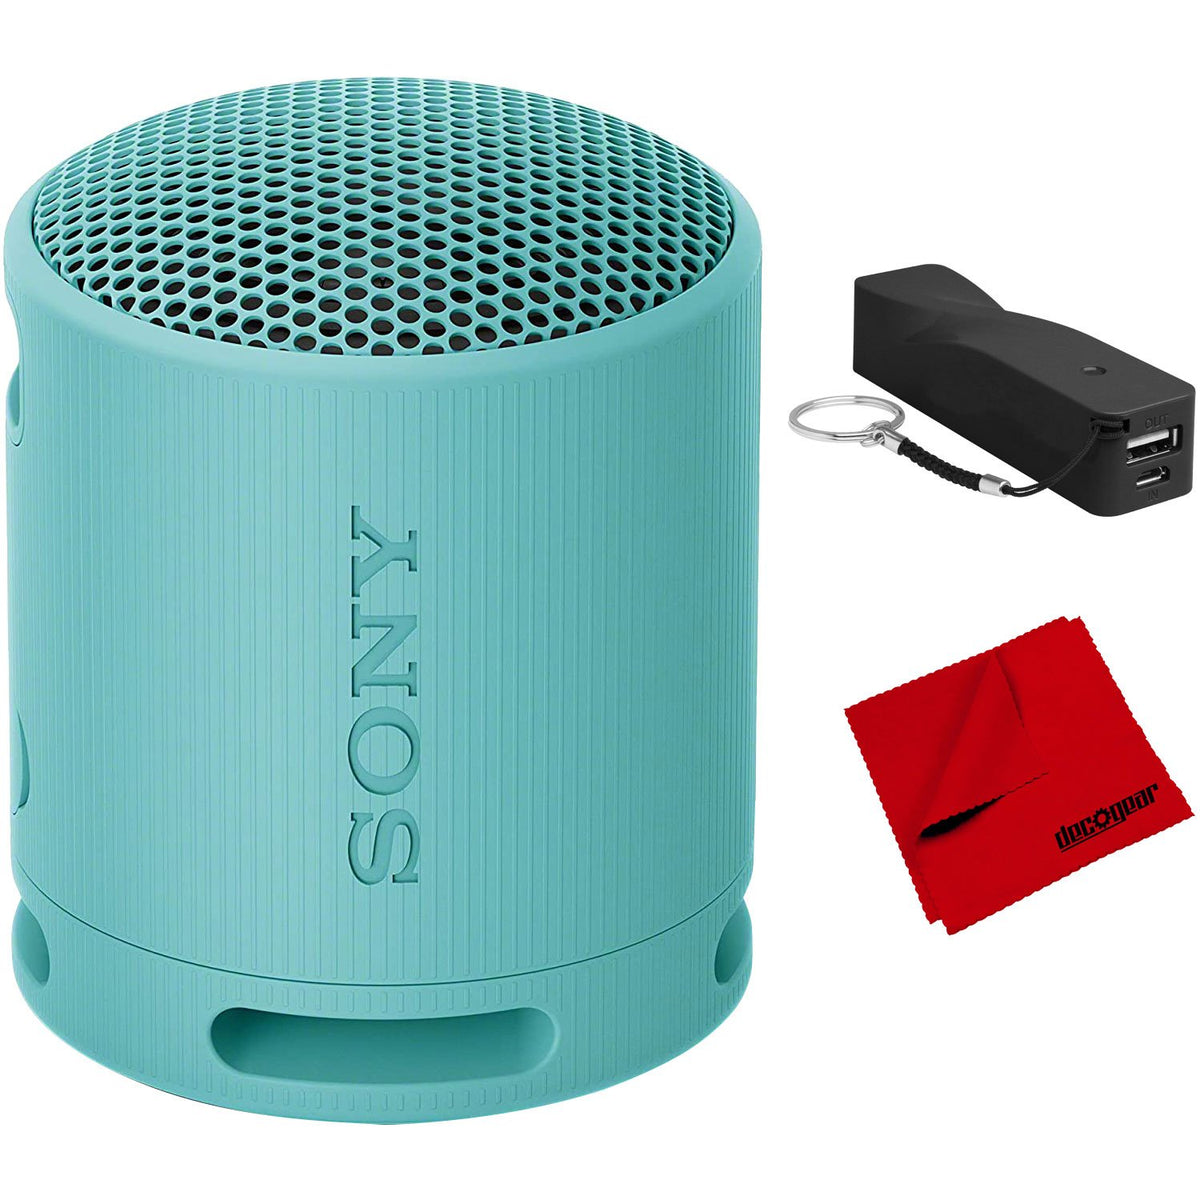 Sony XB100 Compact Bluetooth Wireless Speaker (Blue) Bundle with